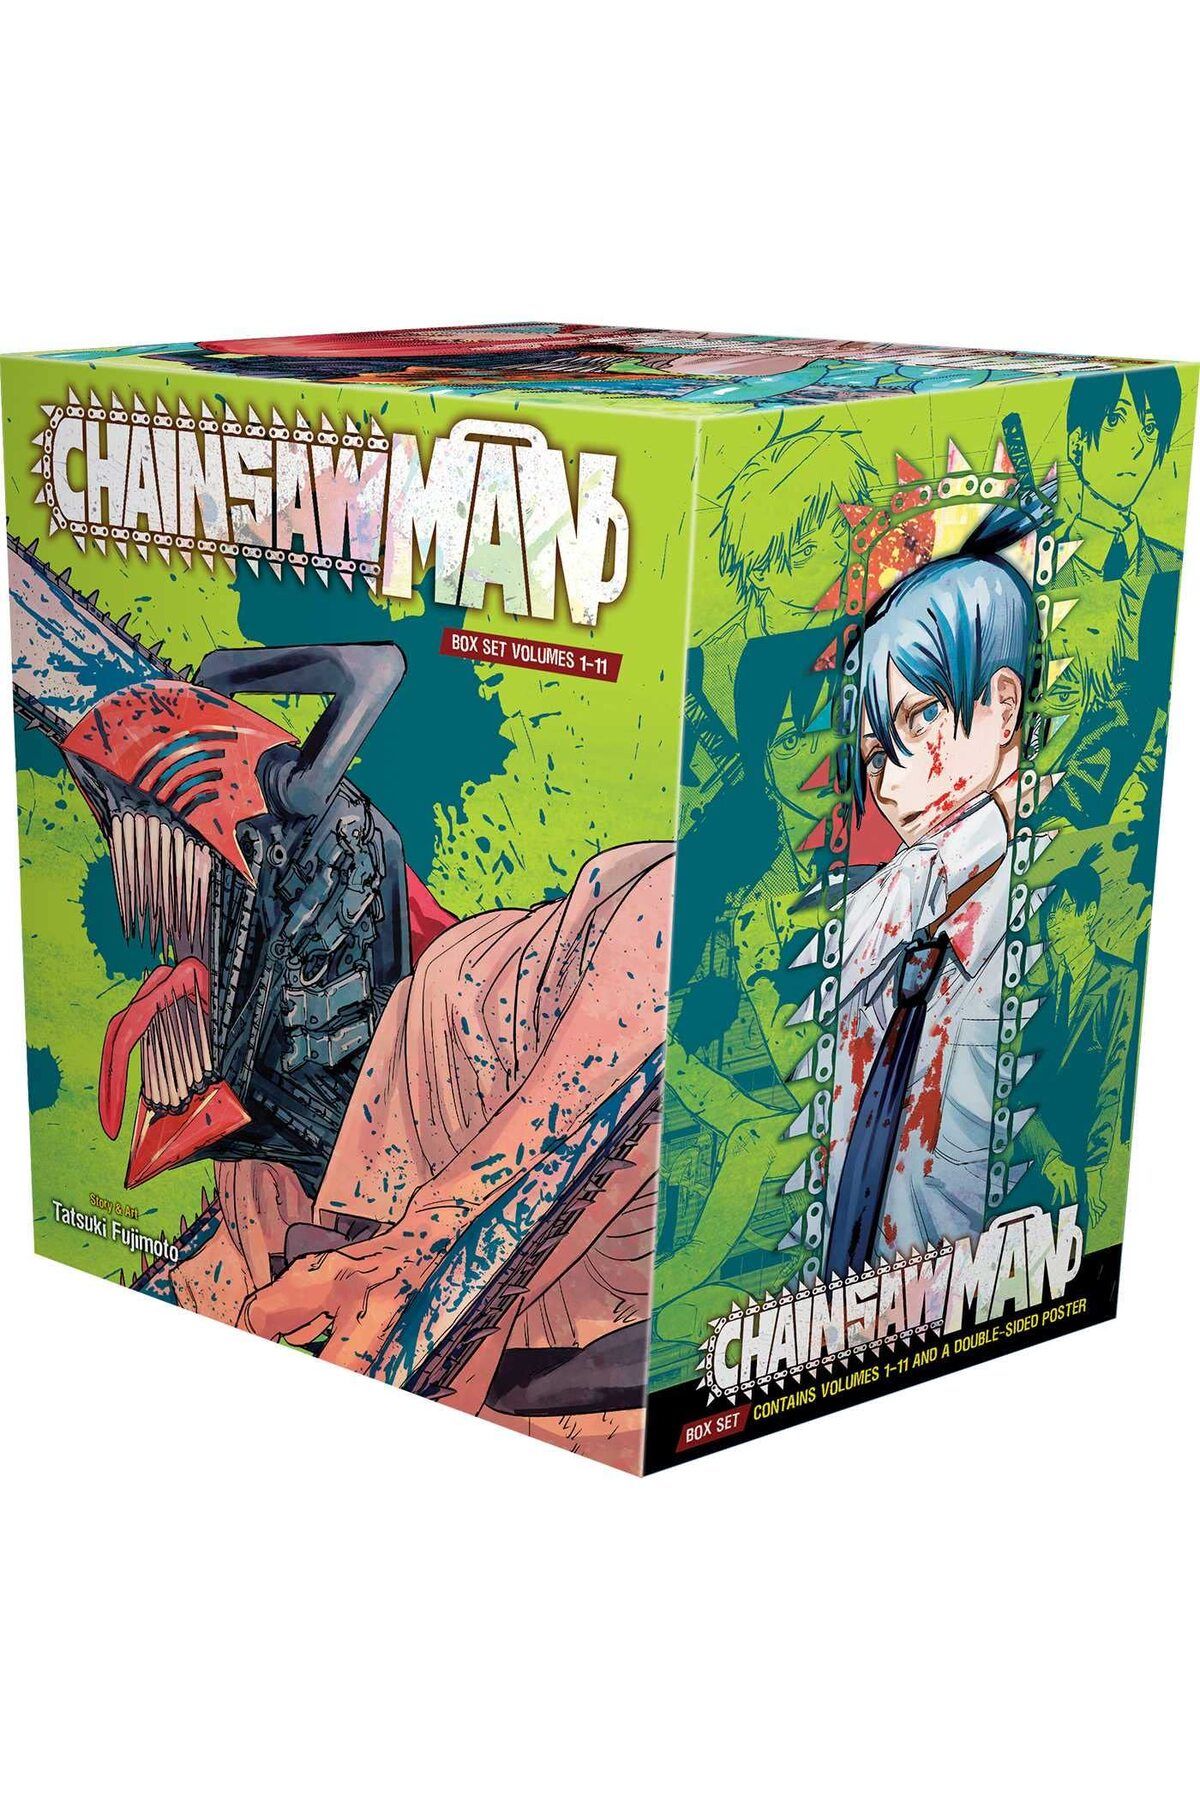 Viz Media Chainsaw Man Box Set: Includes volumes 1-11